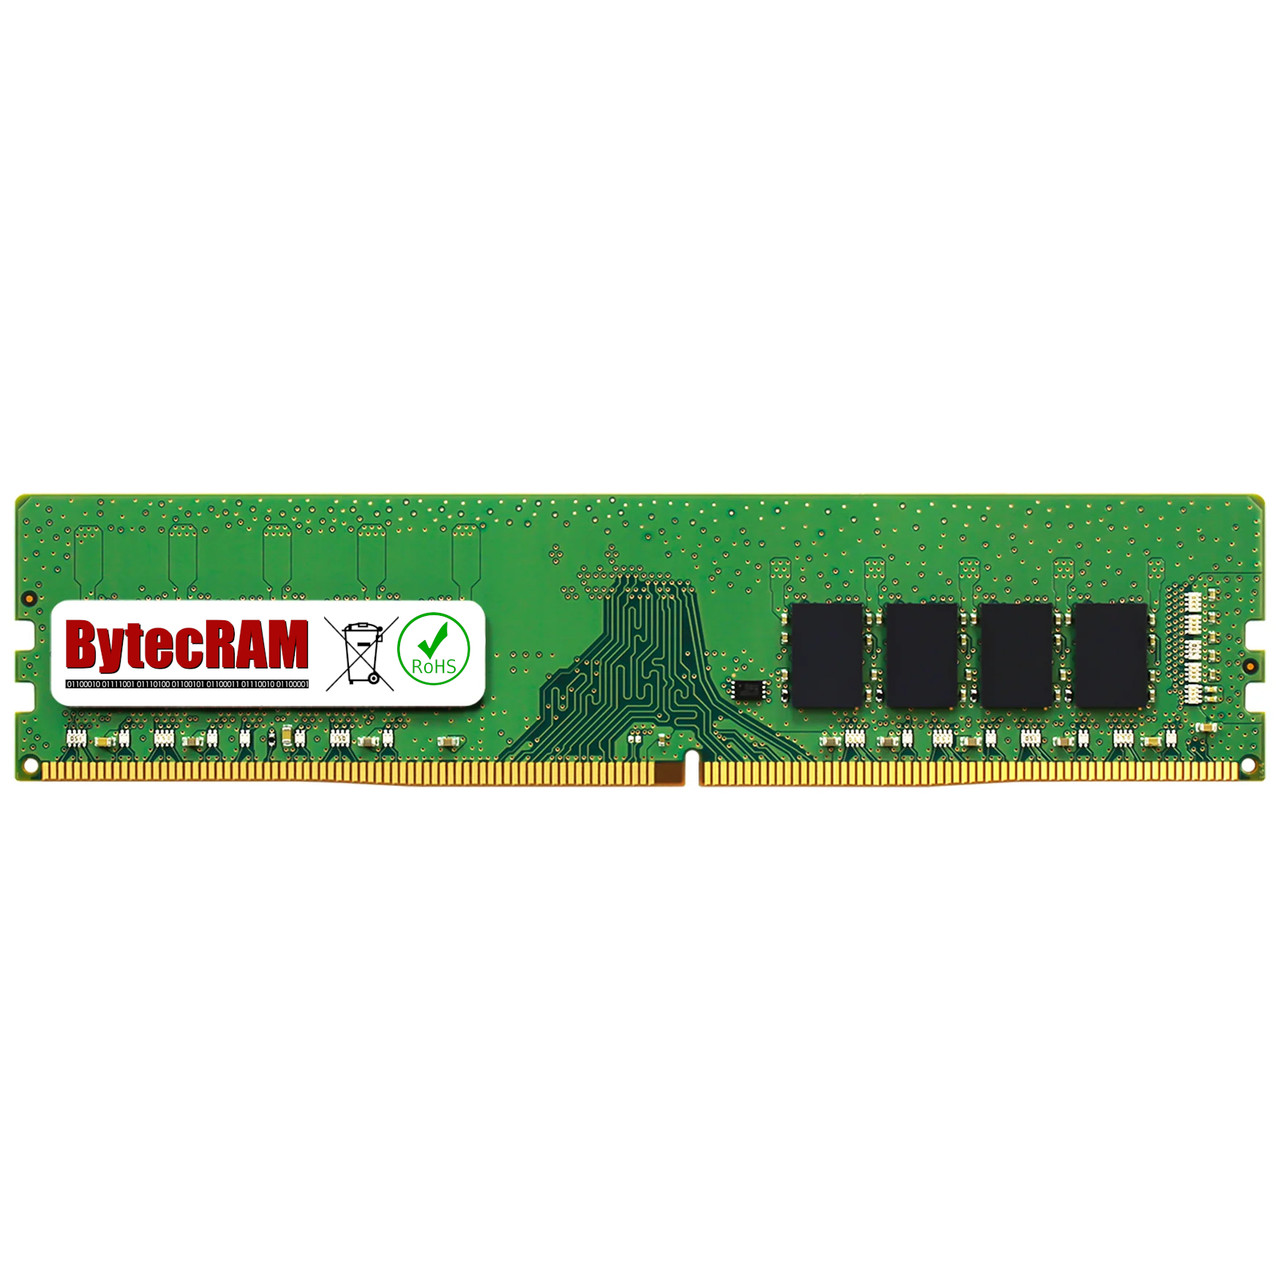 eBay*8GB Acer Aspire GX-281-UR12 DDR4 2400MHz UDIMM Memory RAM Upgrade